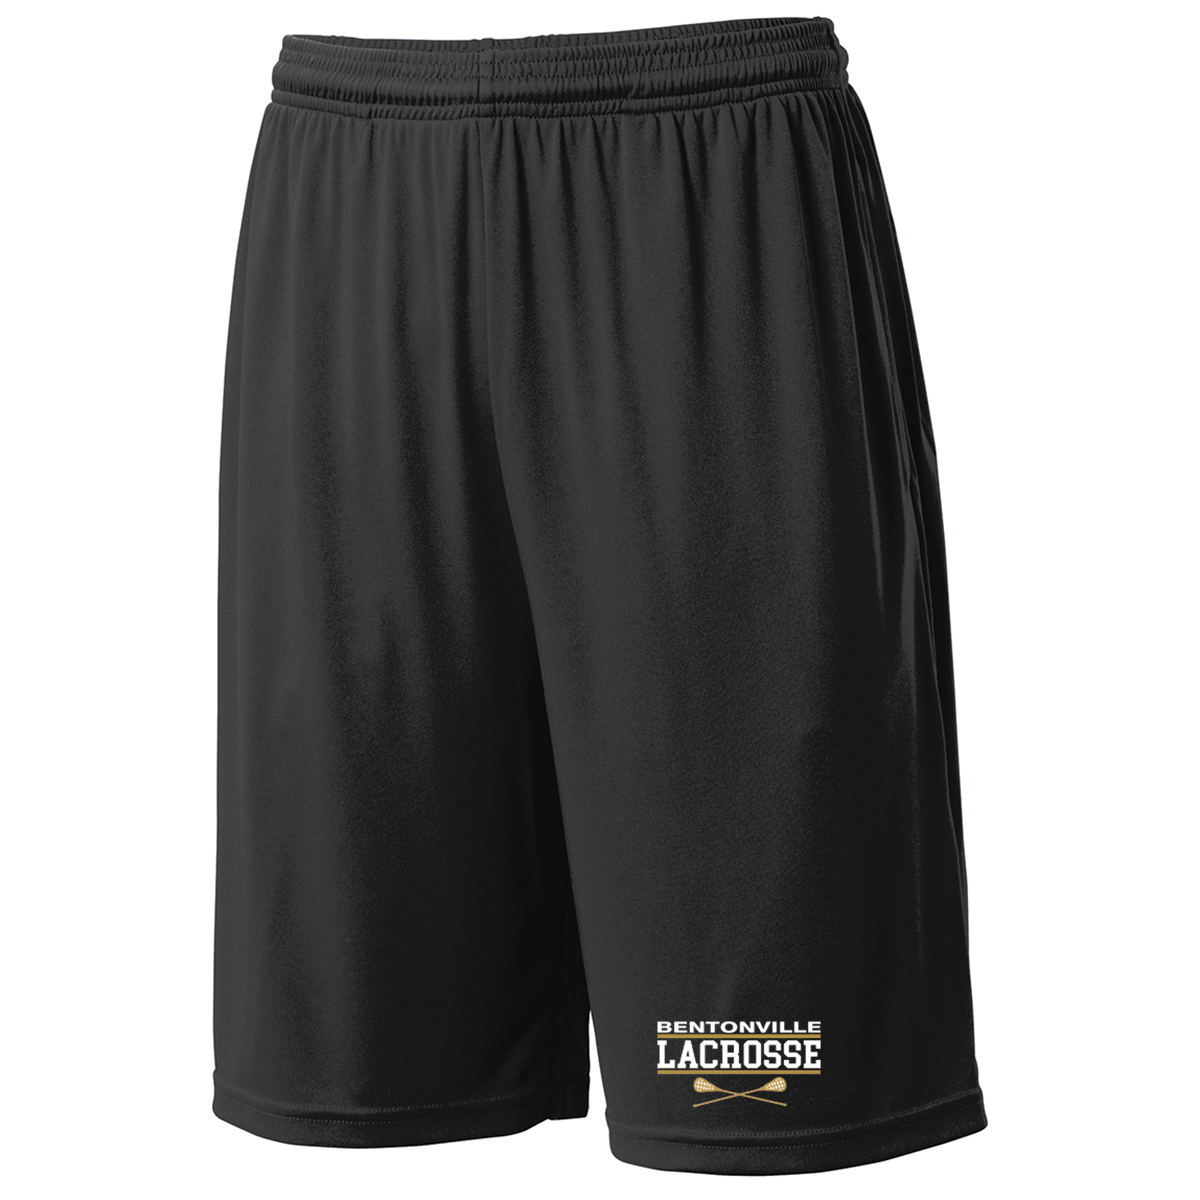 Bentonville Lacrosse Shorts